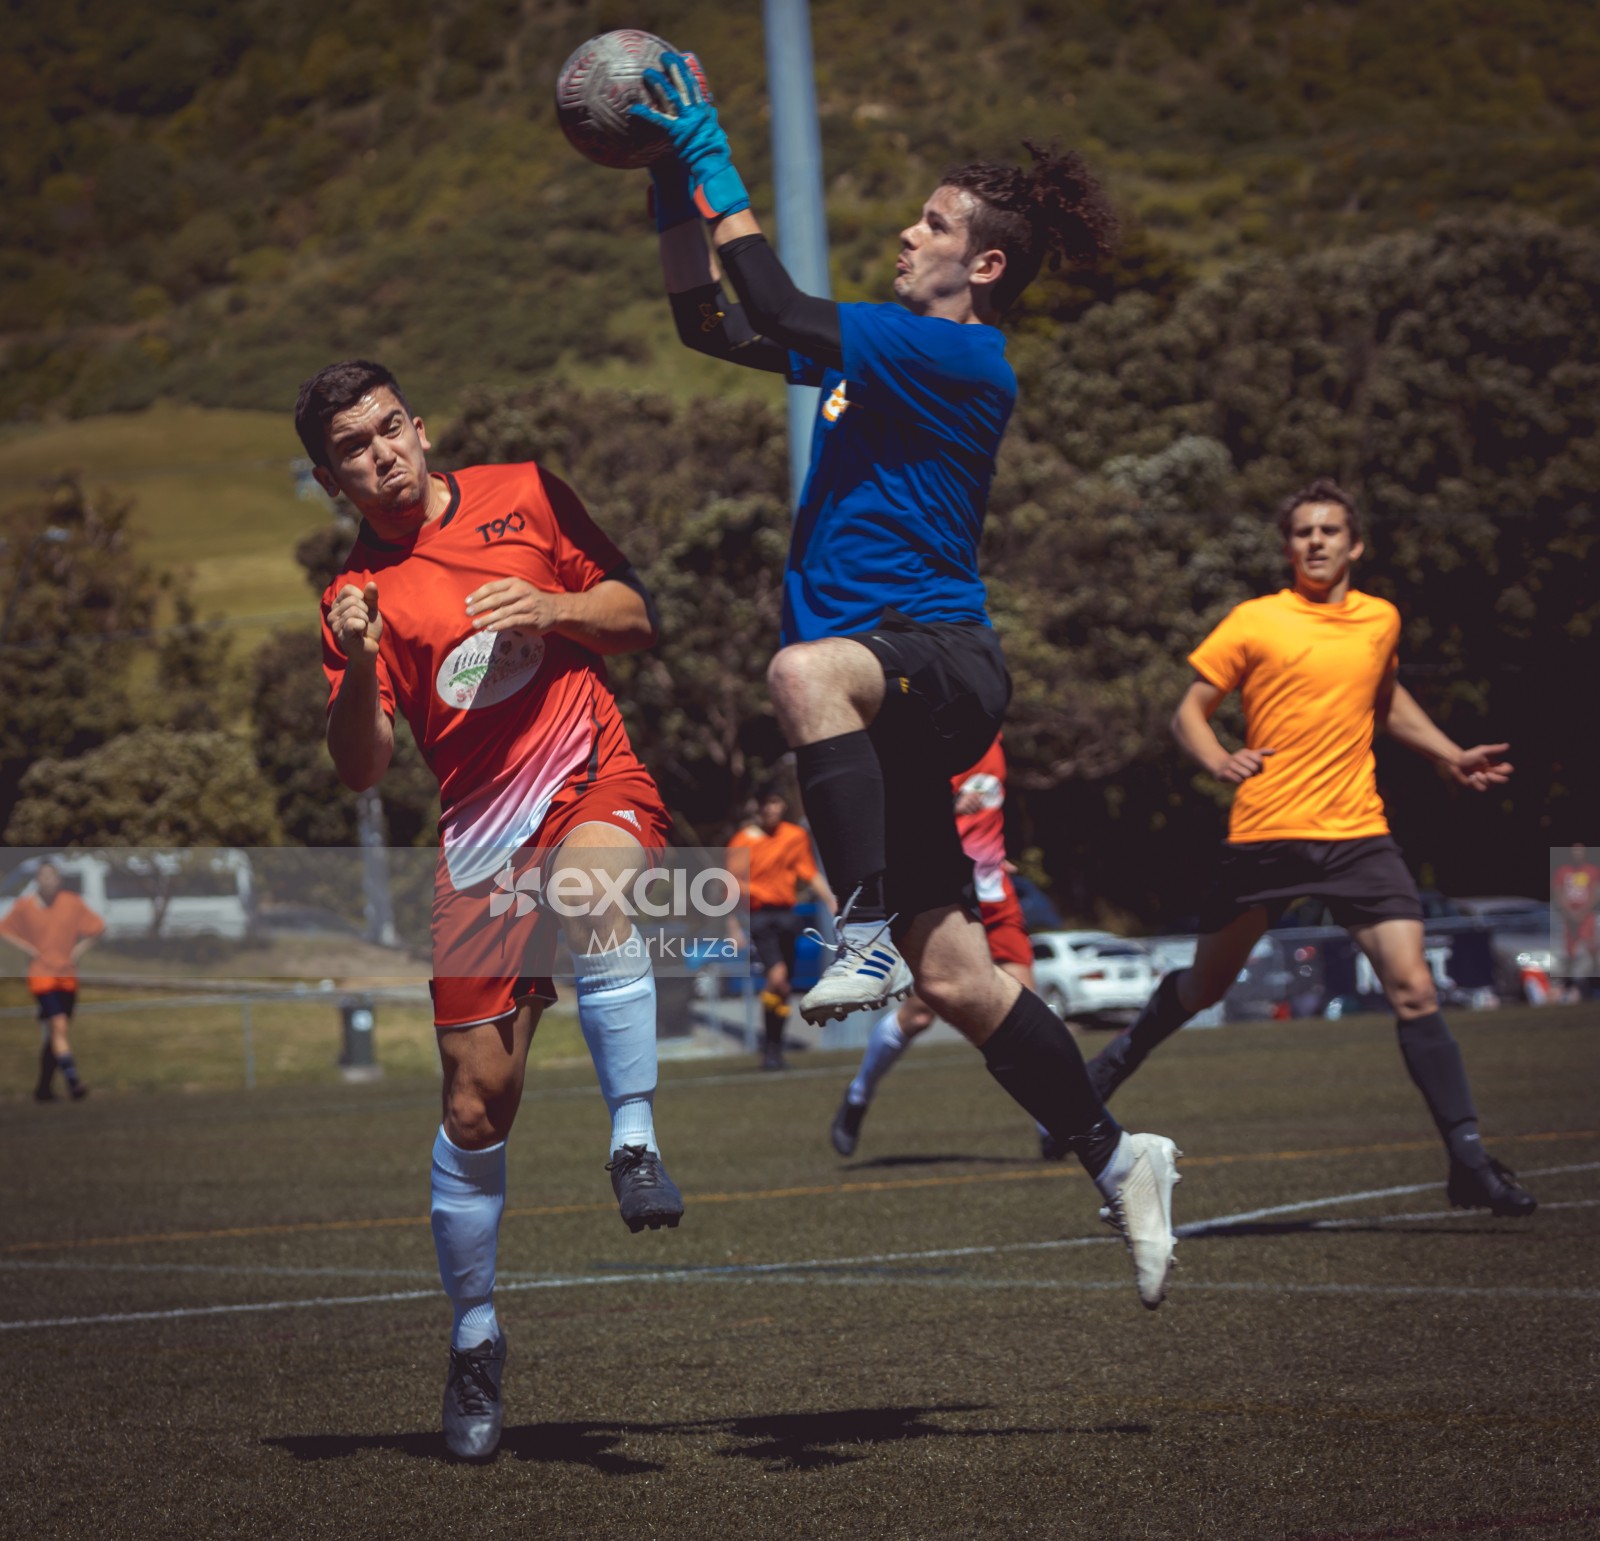 Goalkeeper wearing blue shirt catches ball midair - Sports Zone sunday league